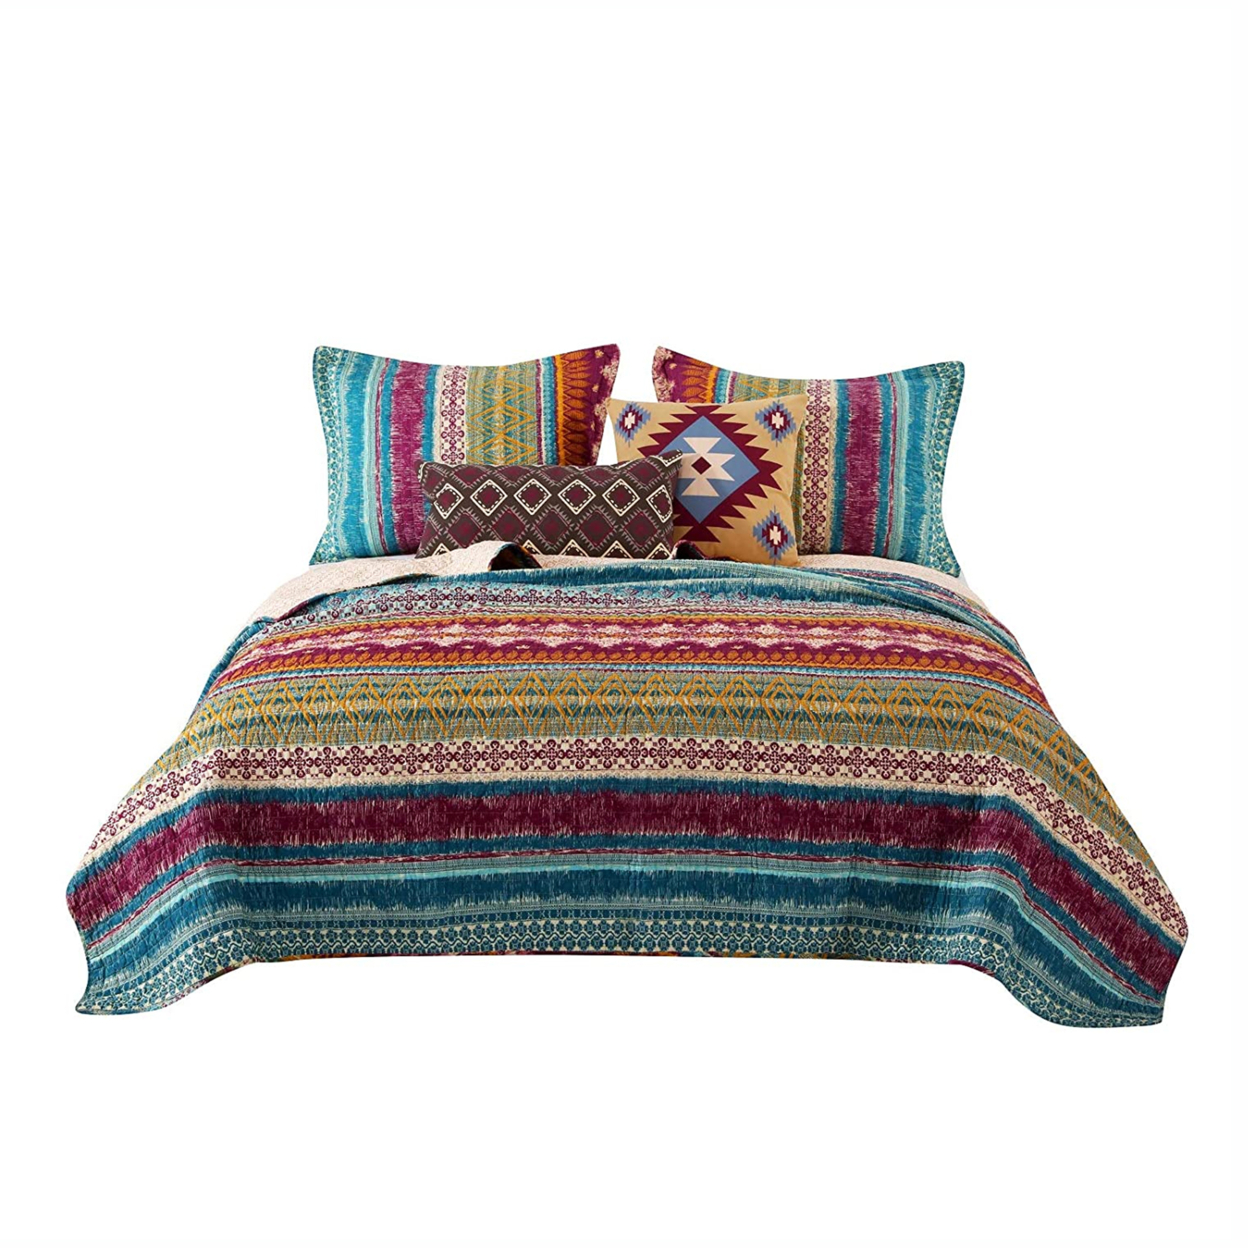 Tribal Print King Quilt Set With Decorative Pillows, Multicolor- Saltoro Sherpi